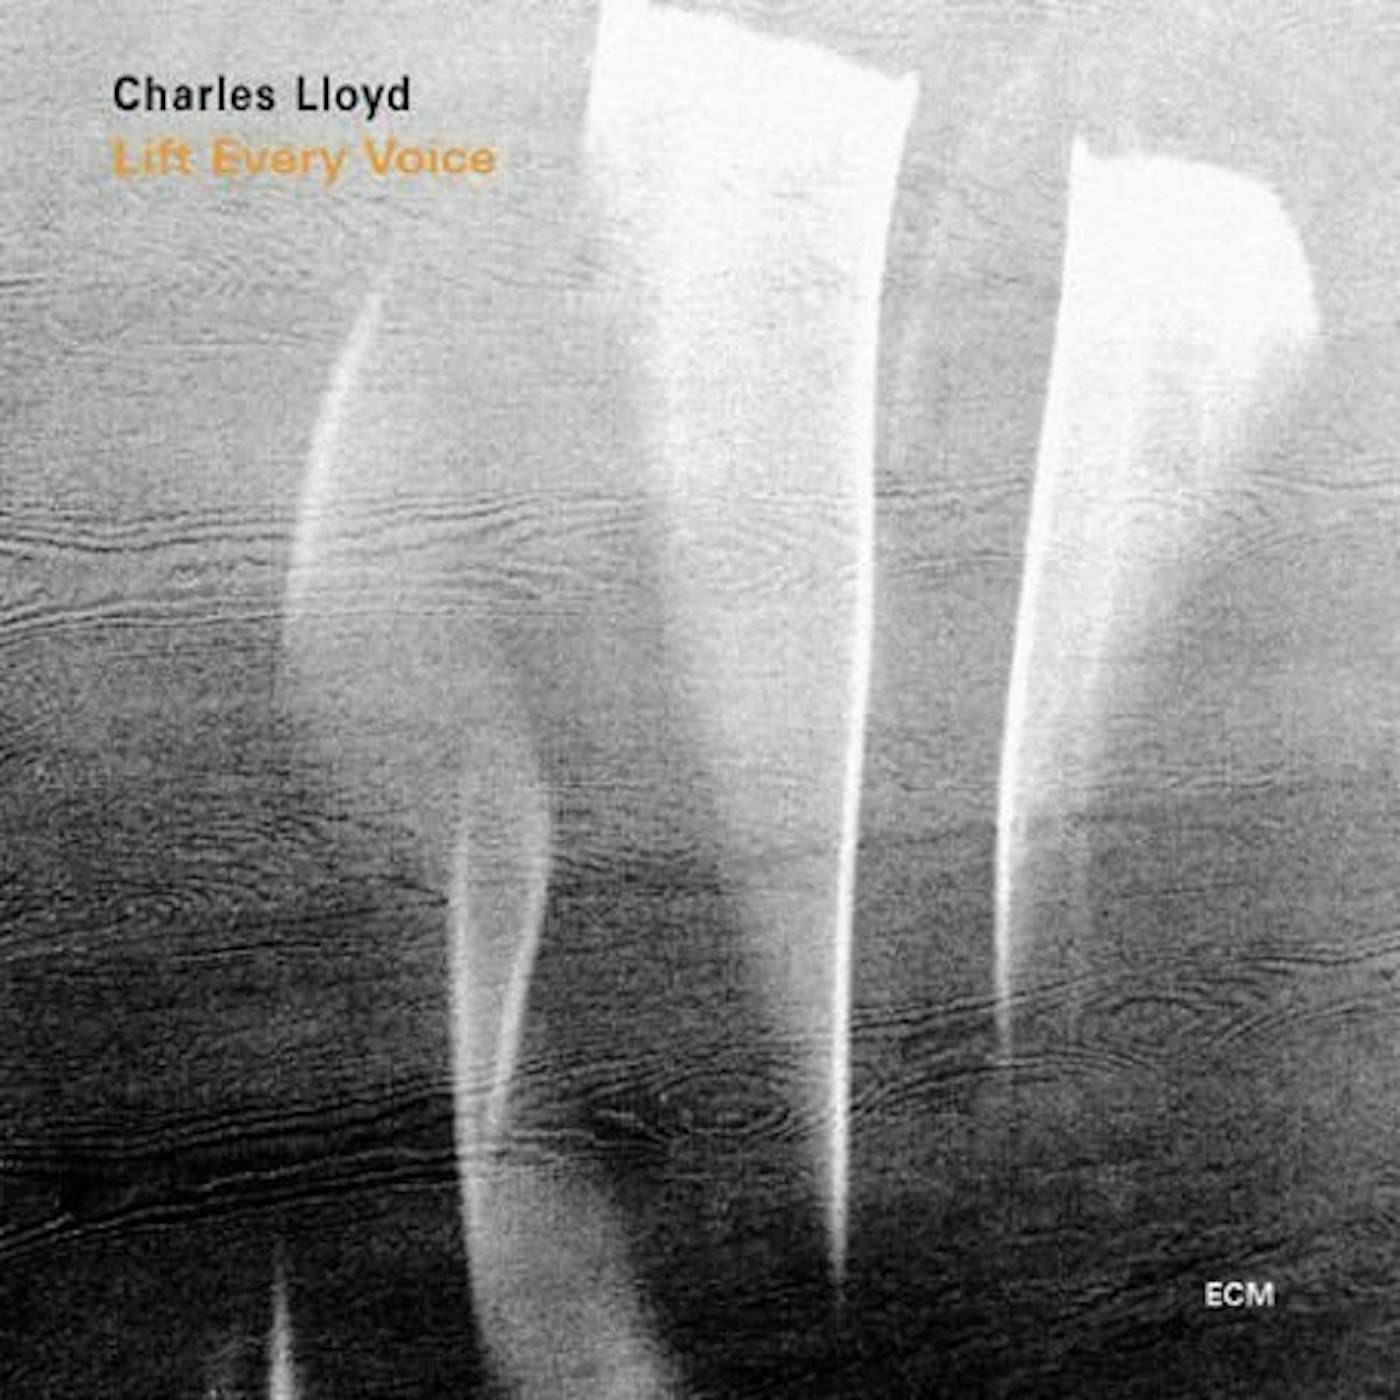 Charles Lloyd LIFT EVERY VOICE CD